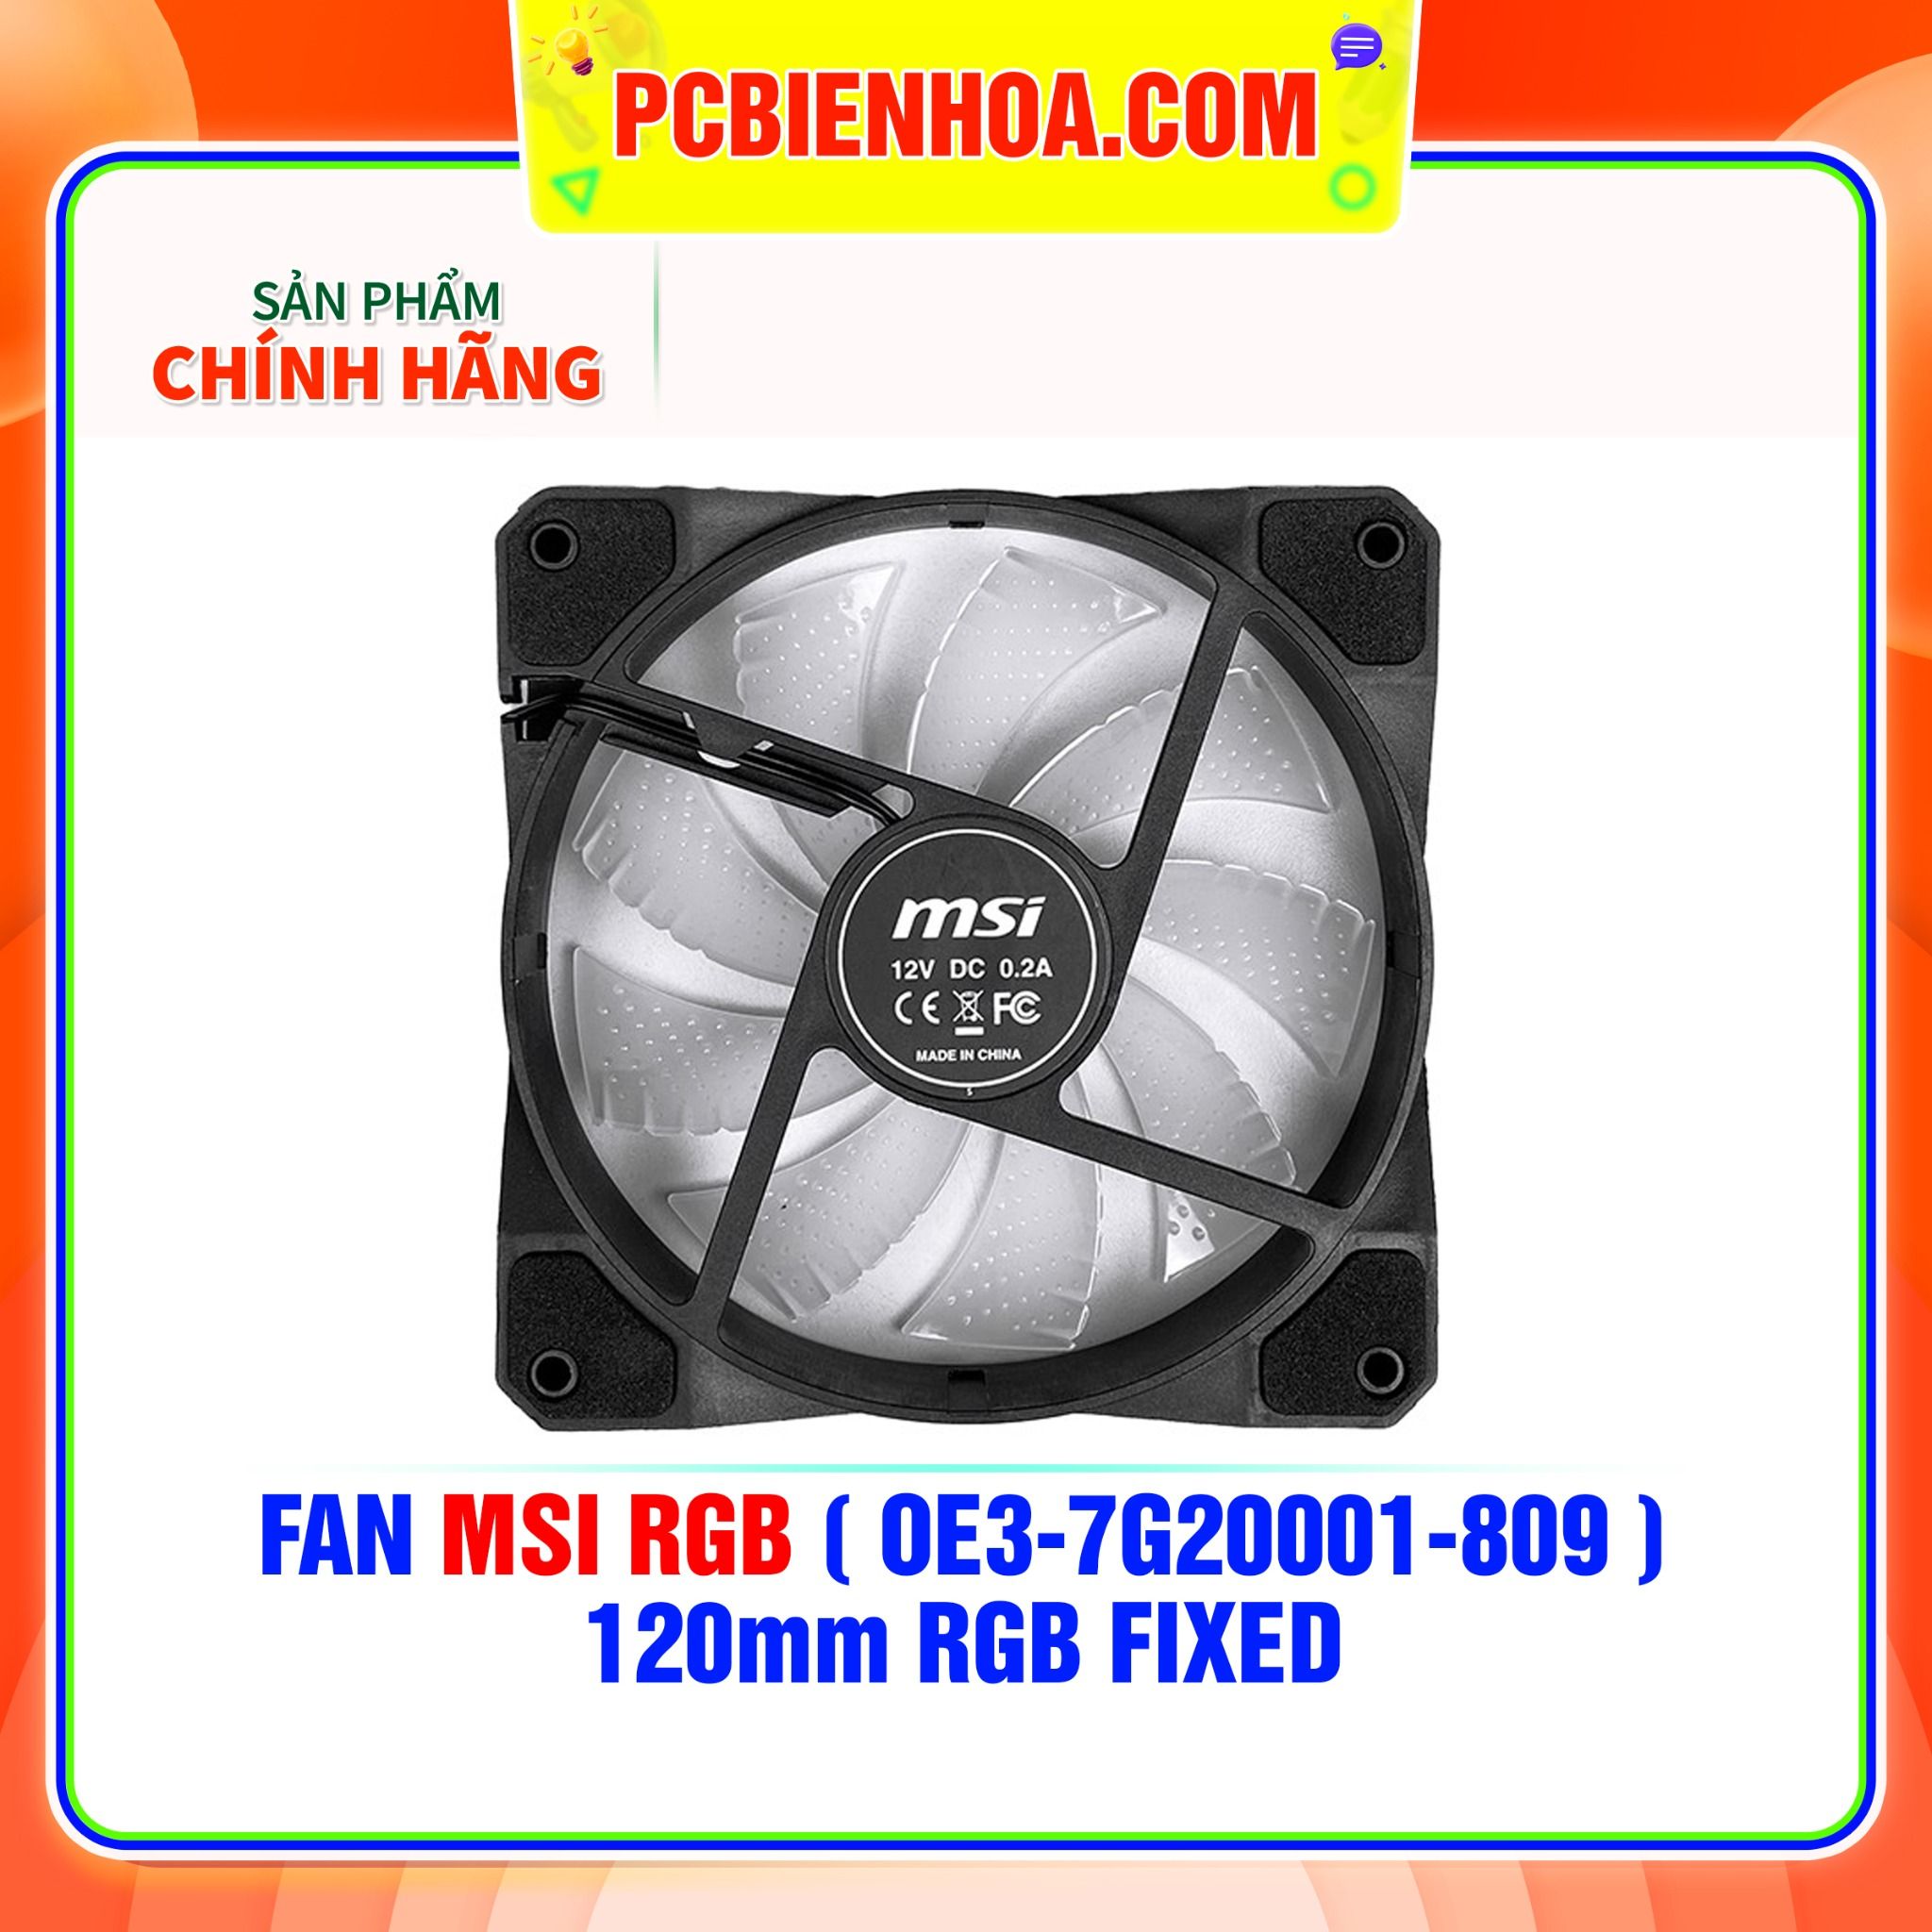  FAN MSI RGB ( OE3-7G20001-809 ) 120mm RGB FIXED 